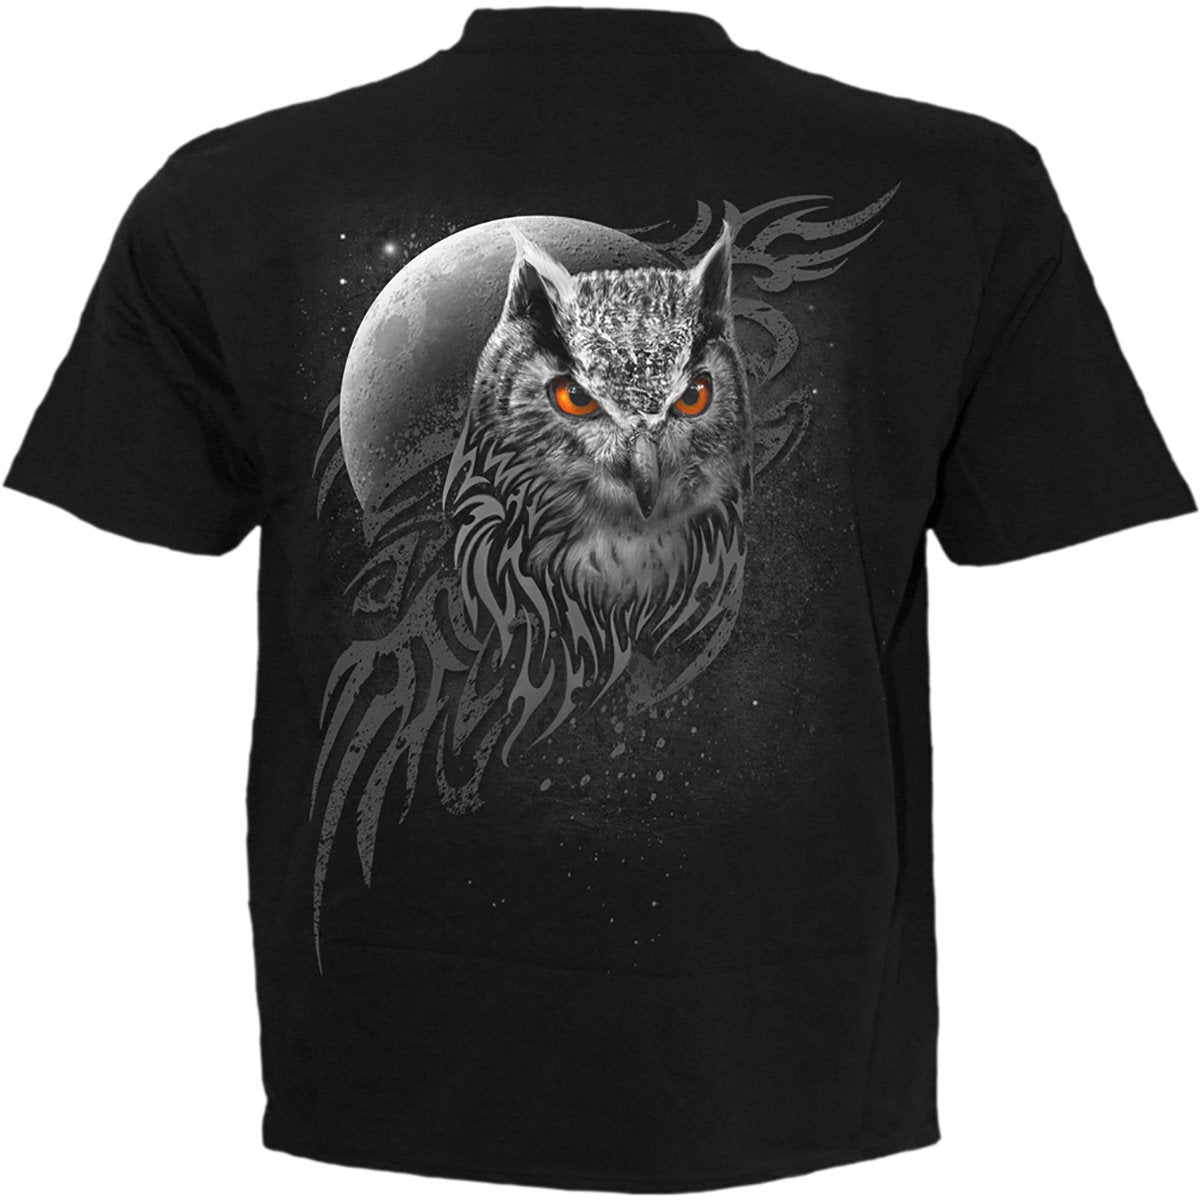 WINGS OF WISDOM - T-Shirt Black - Spiral USA